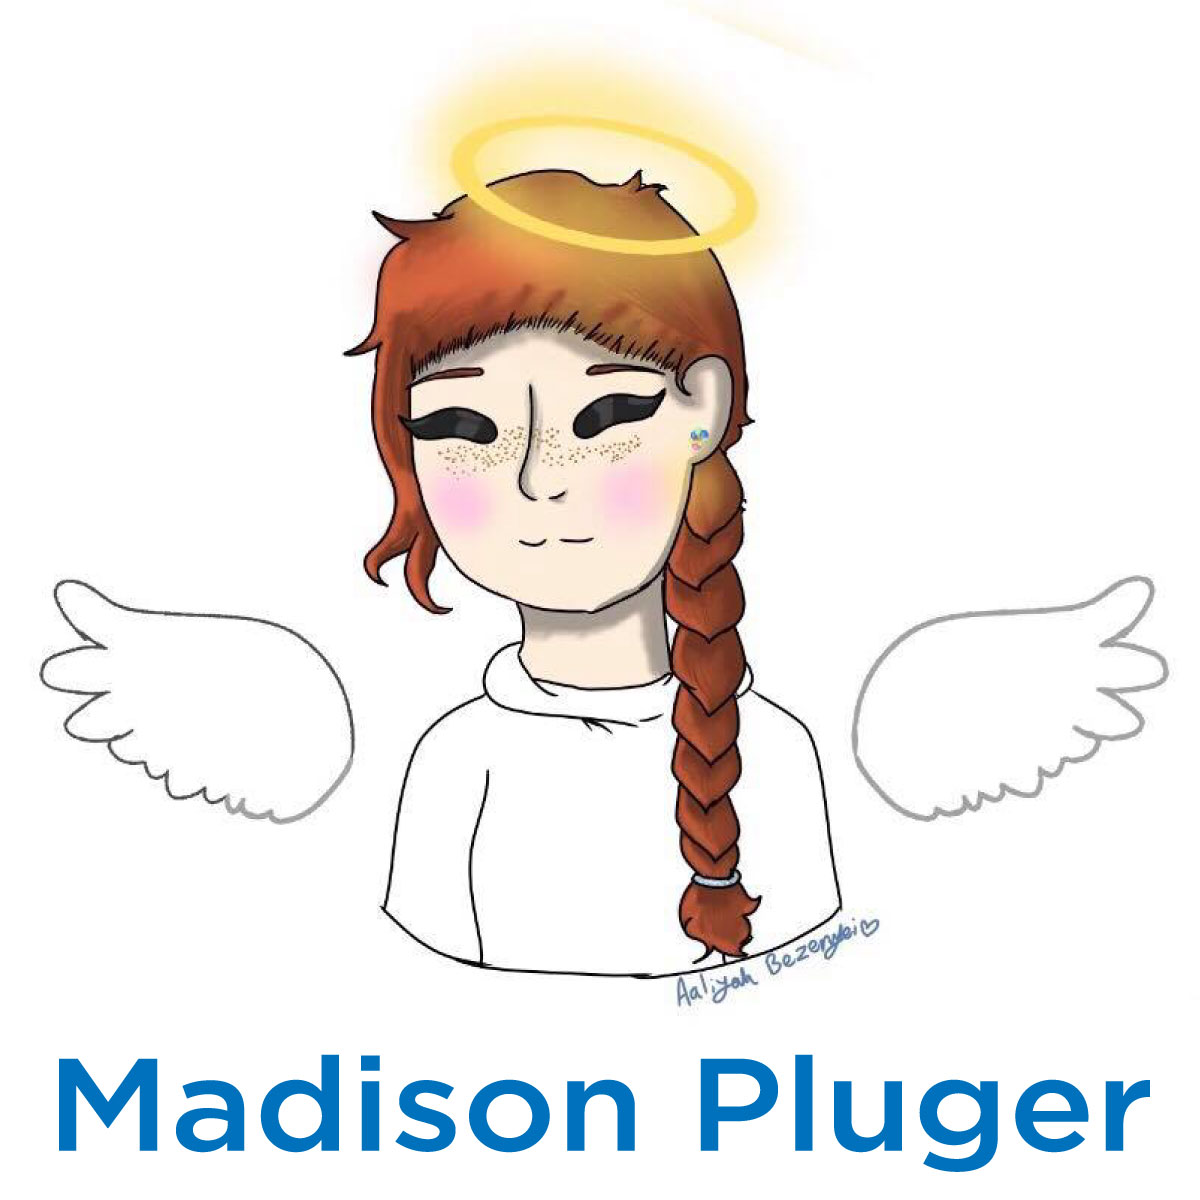 Madison Pluger